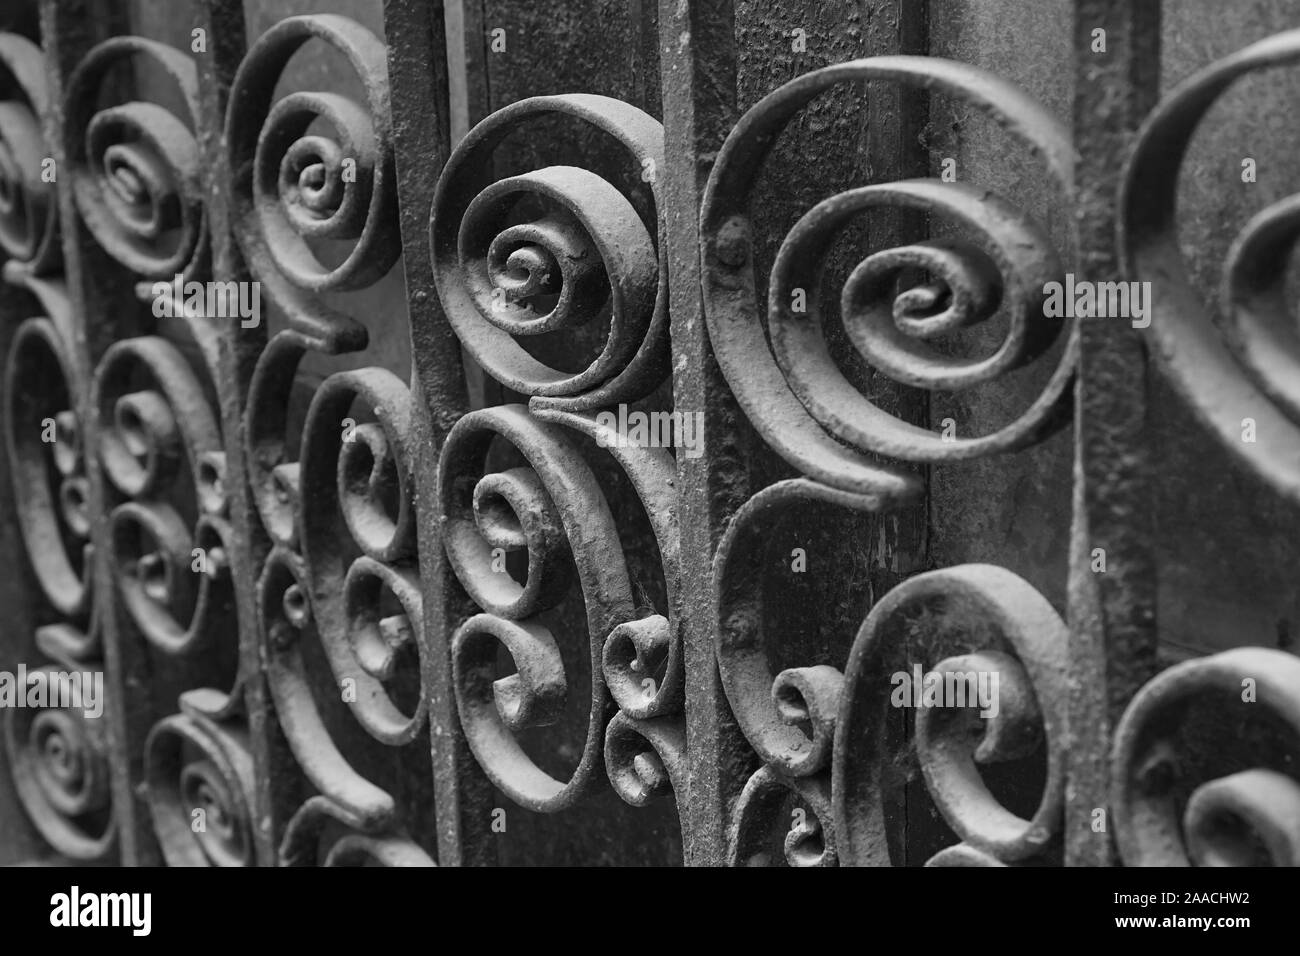 Spiral pattern on a decorative metal gate Stock Photo